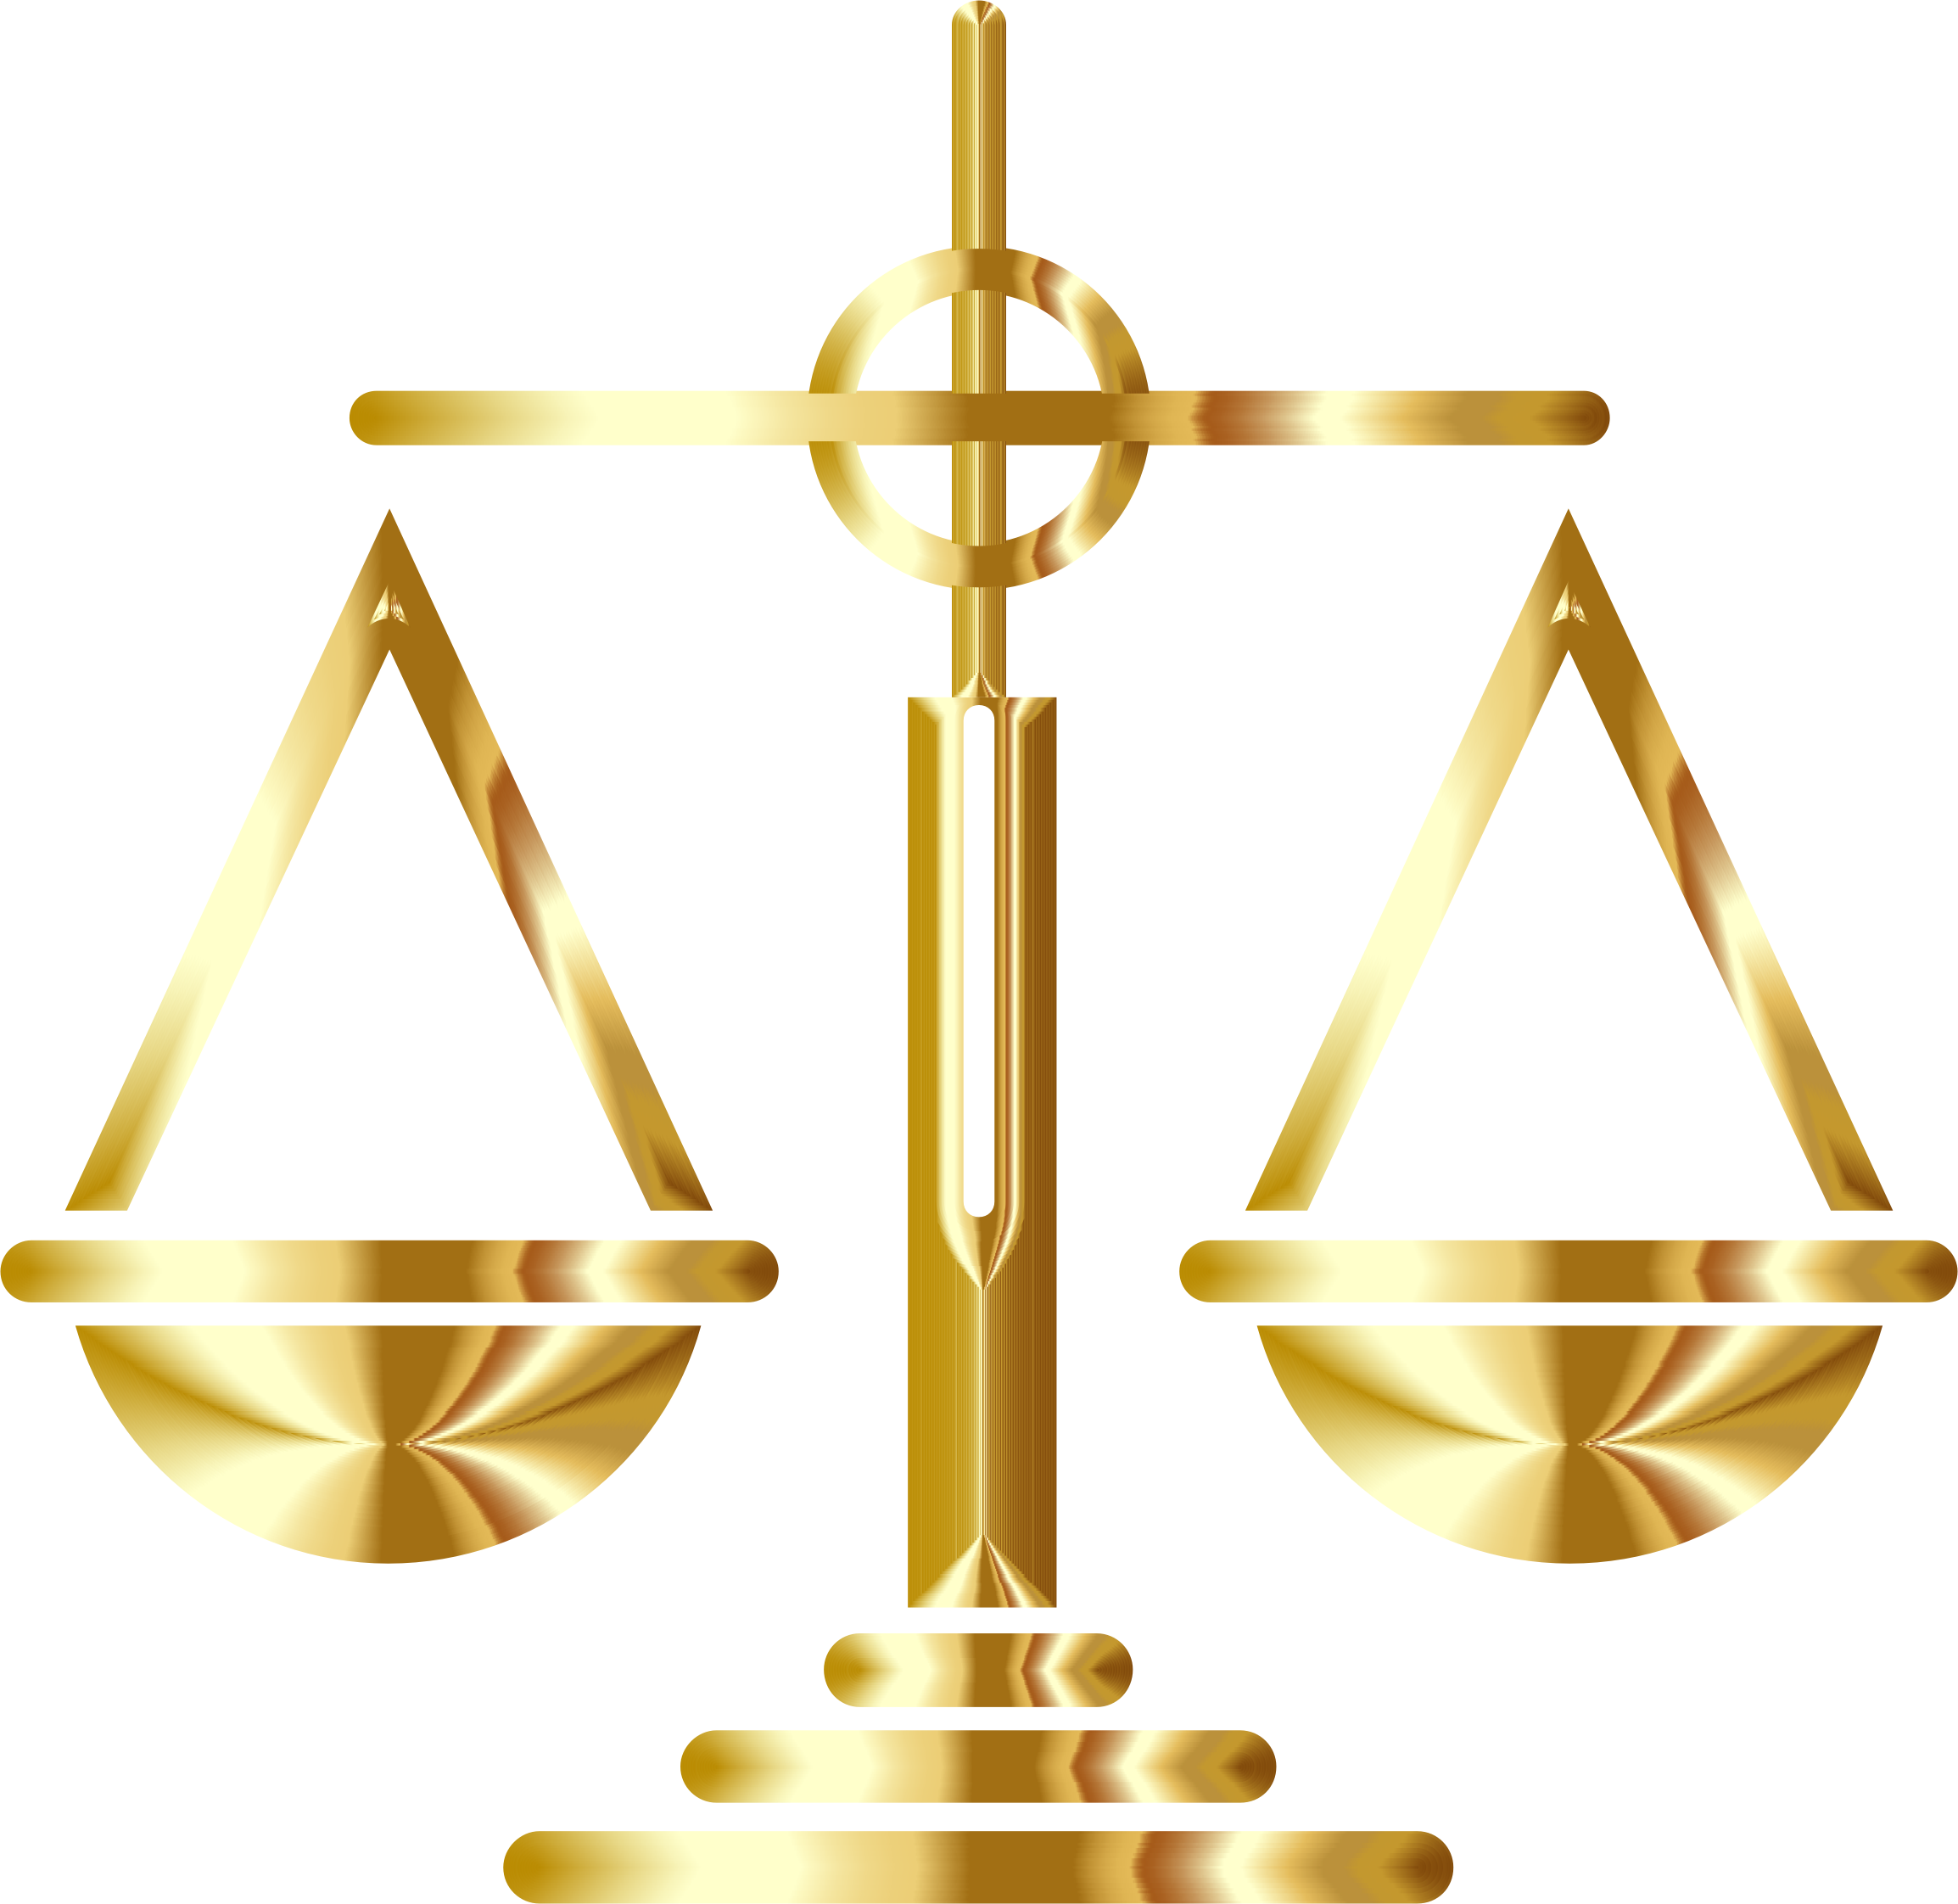 Gold balance. Символ правосудия. Весы символ правосудия. Золотые весы. Символ справедливости.